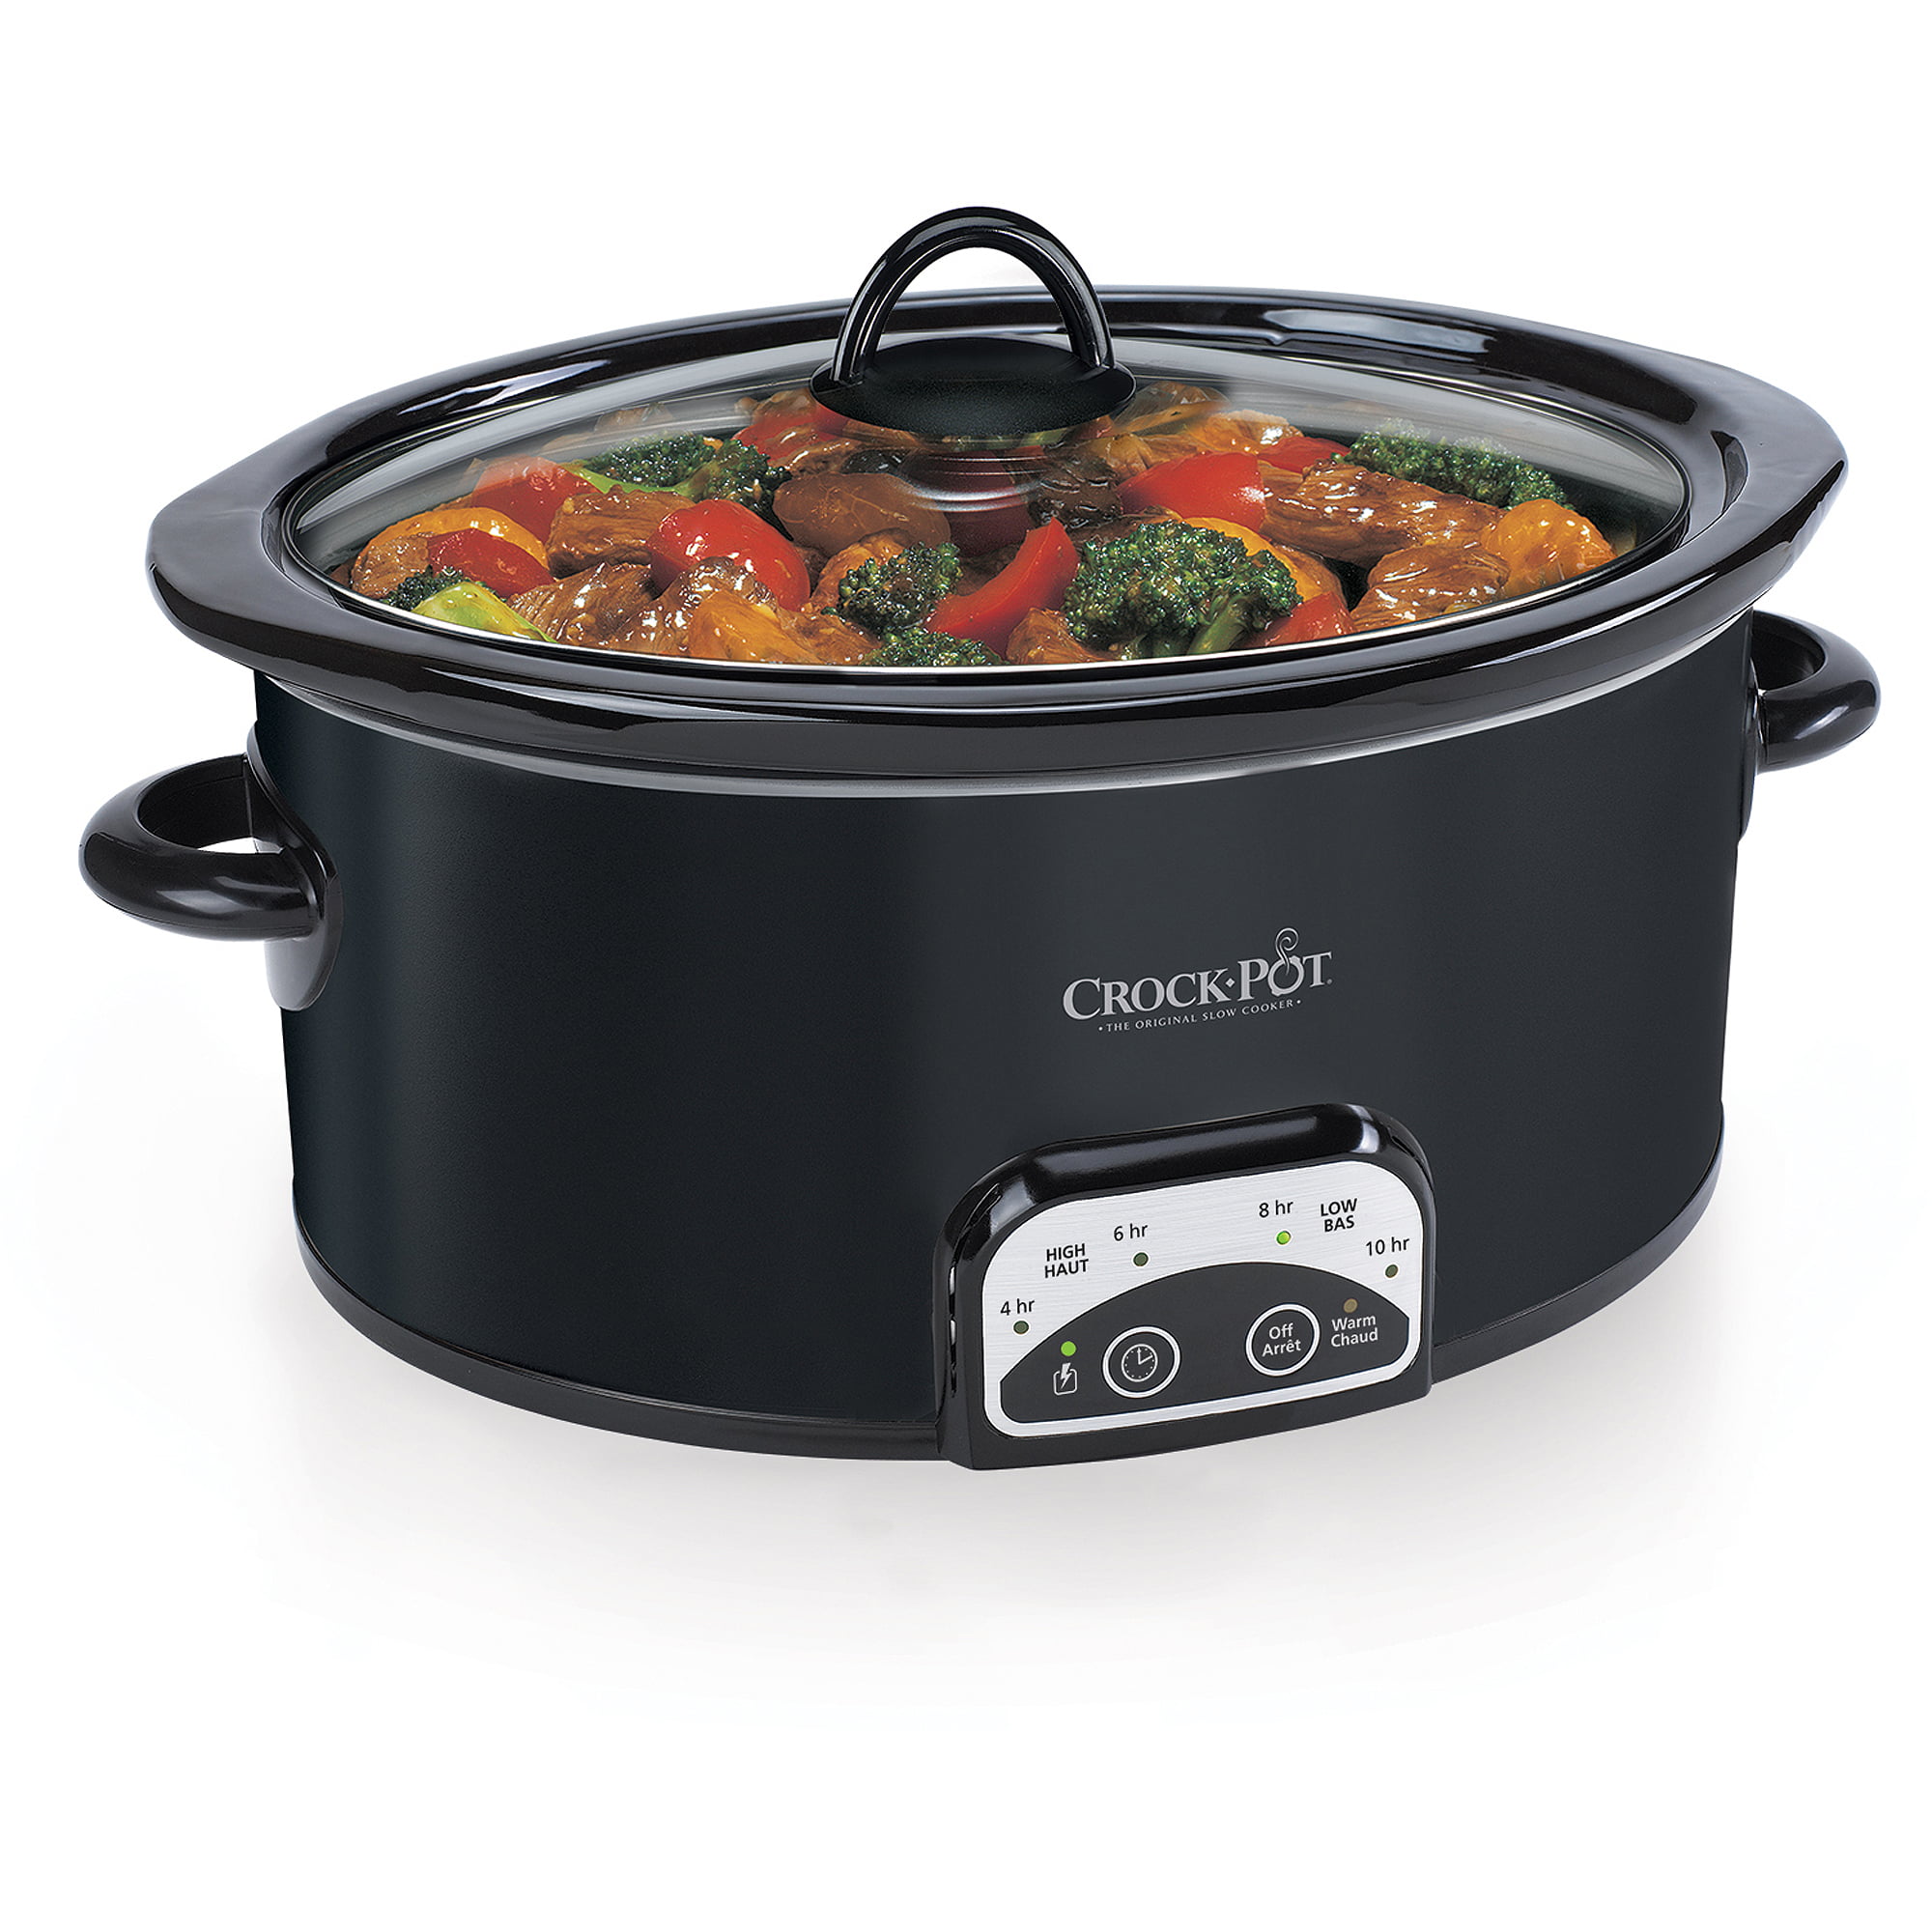 Crock Pot Slow Cooker - ORIGINAL Crock-Pot 4-Quart Smart-Pot Slow
Cooker, SCCPVP400-B , Top Quality Oval eBay